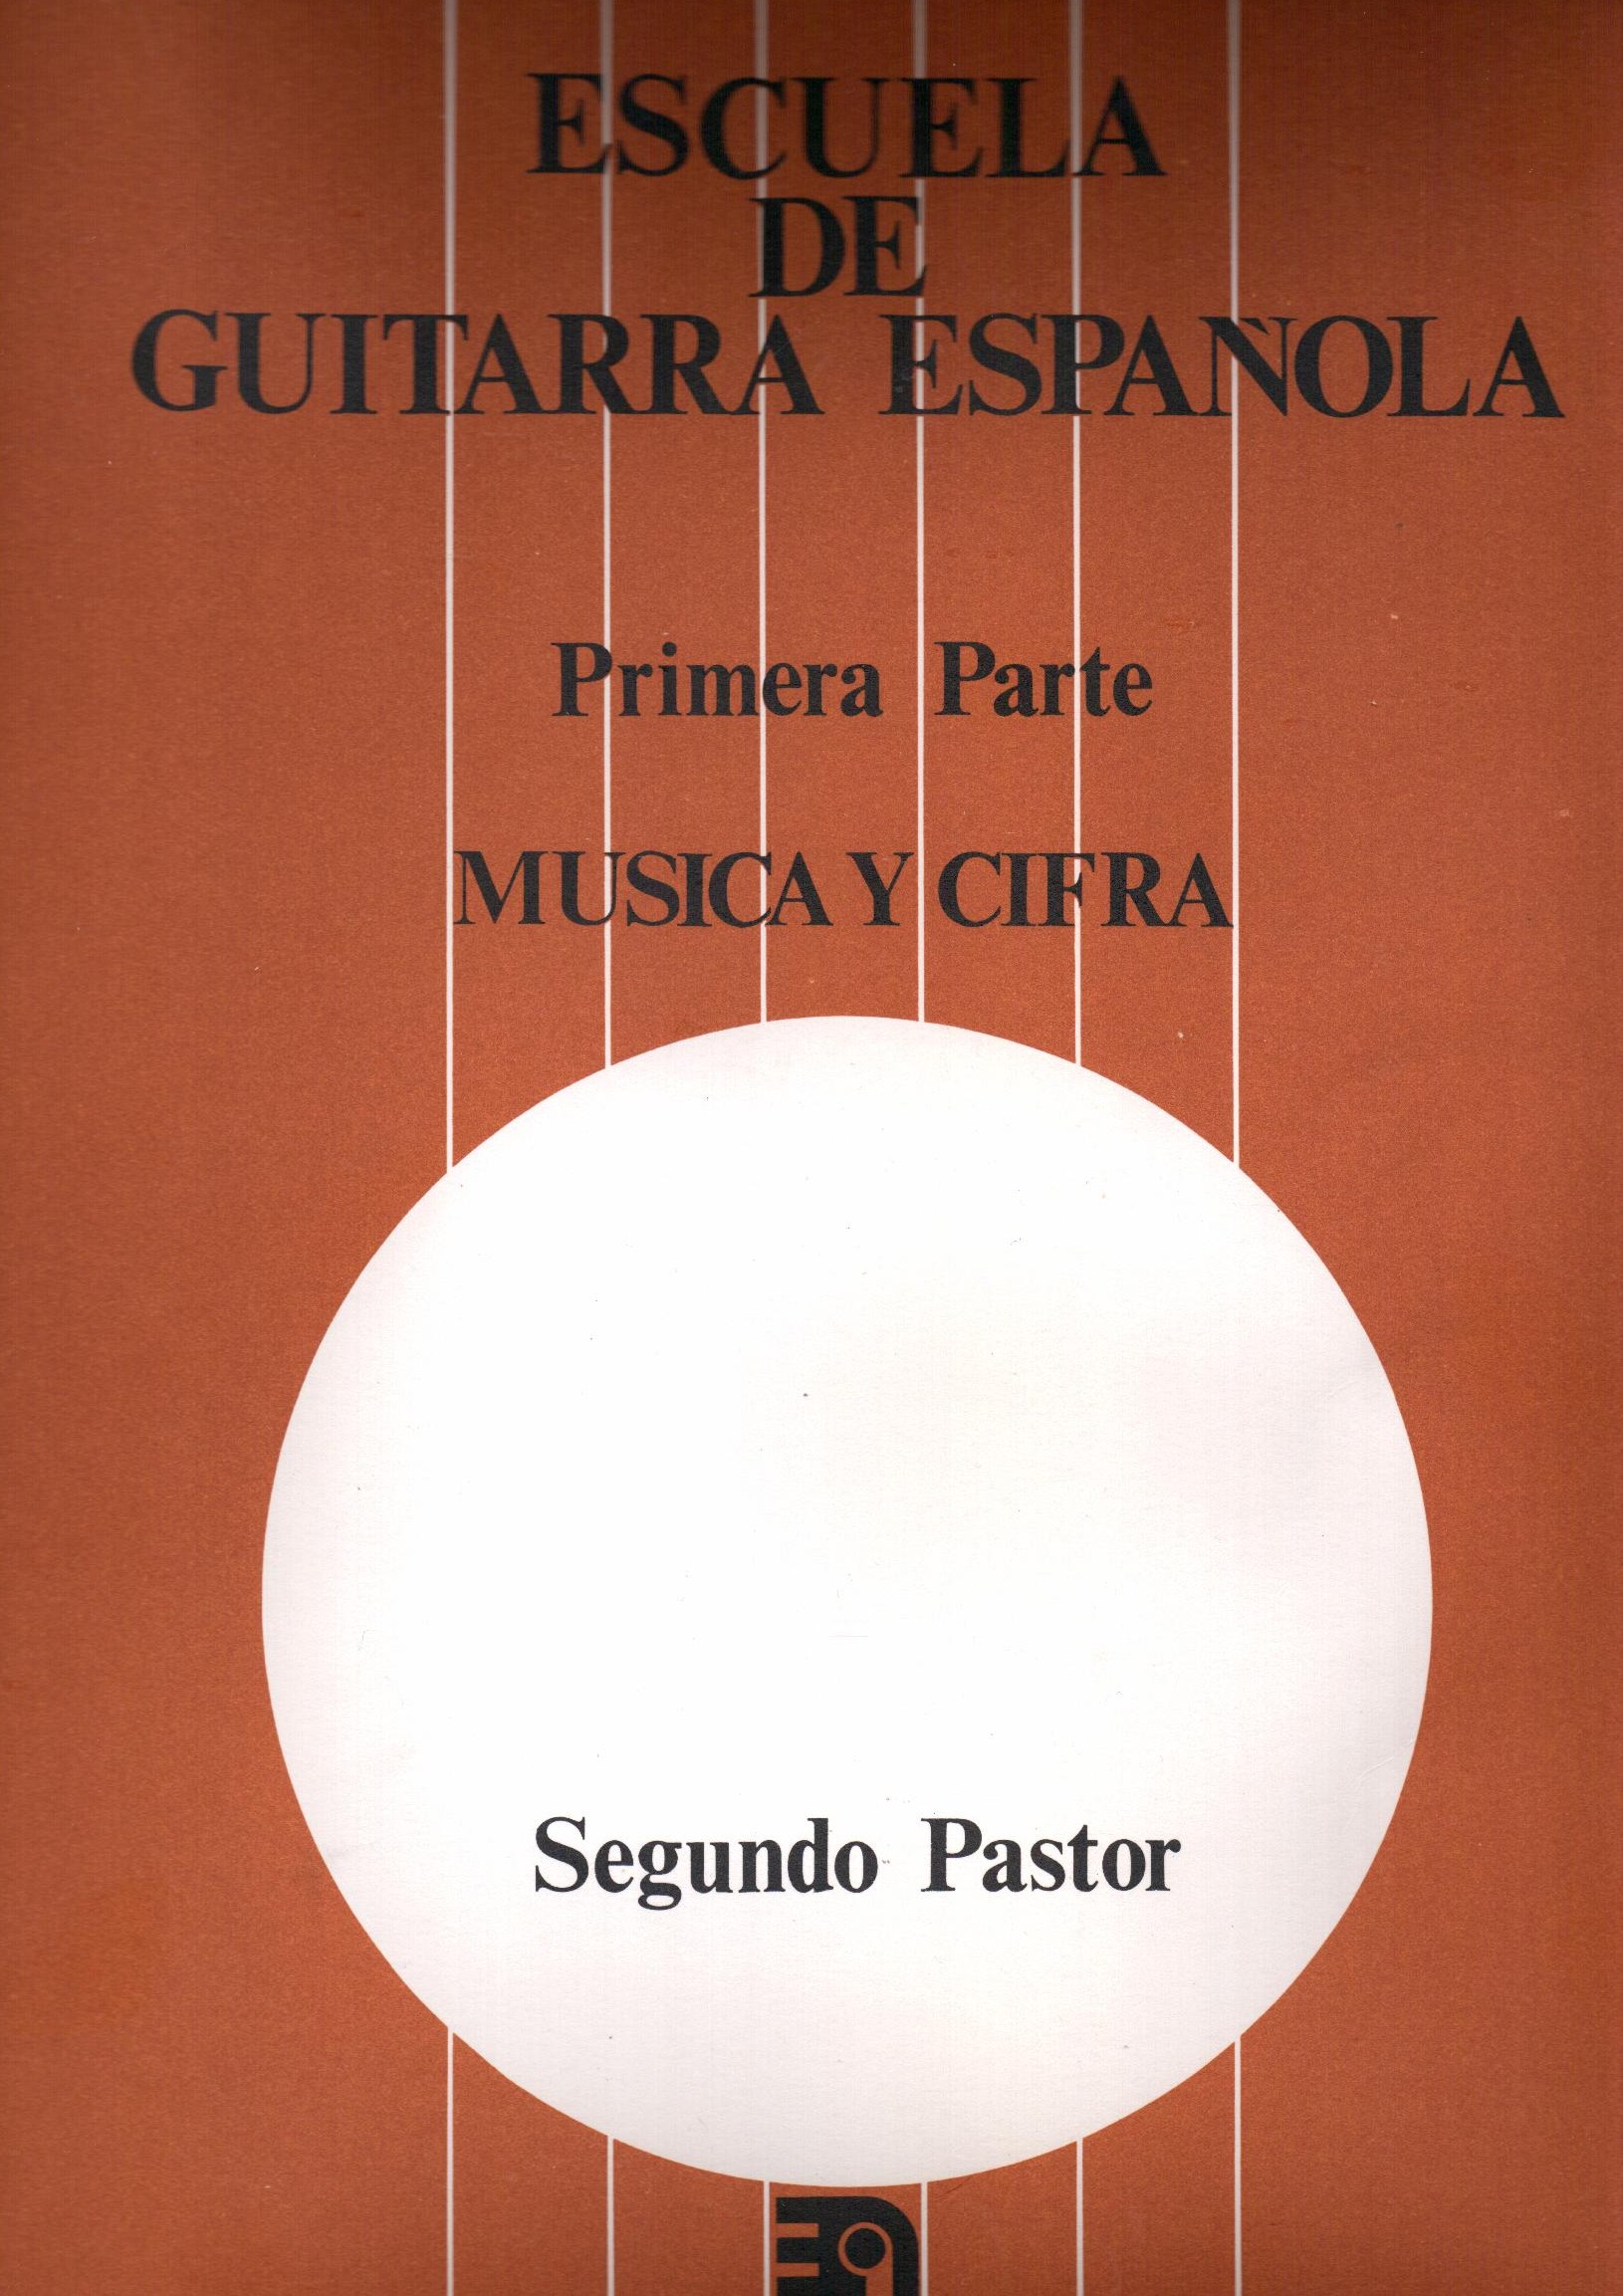 Escuela de guitarra española